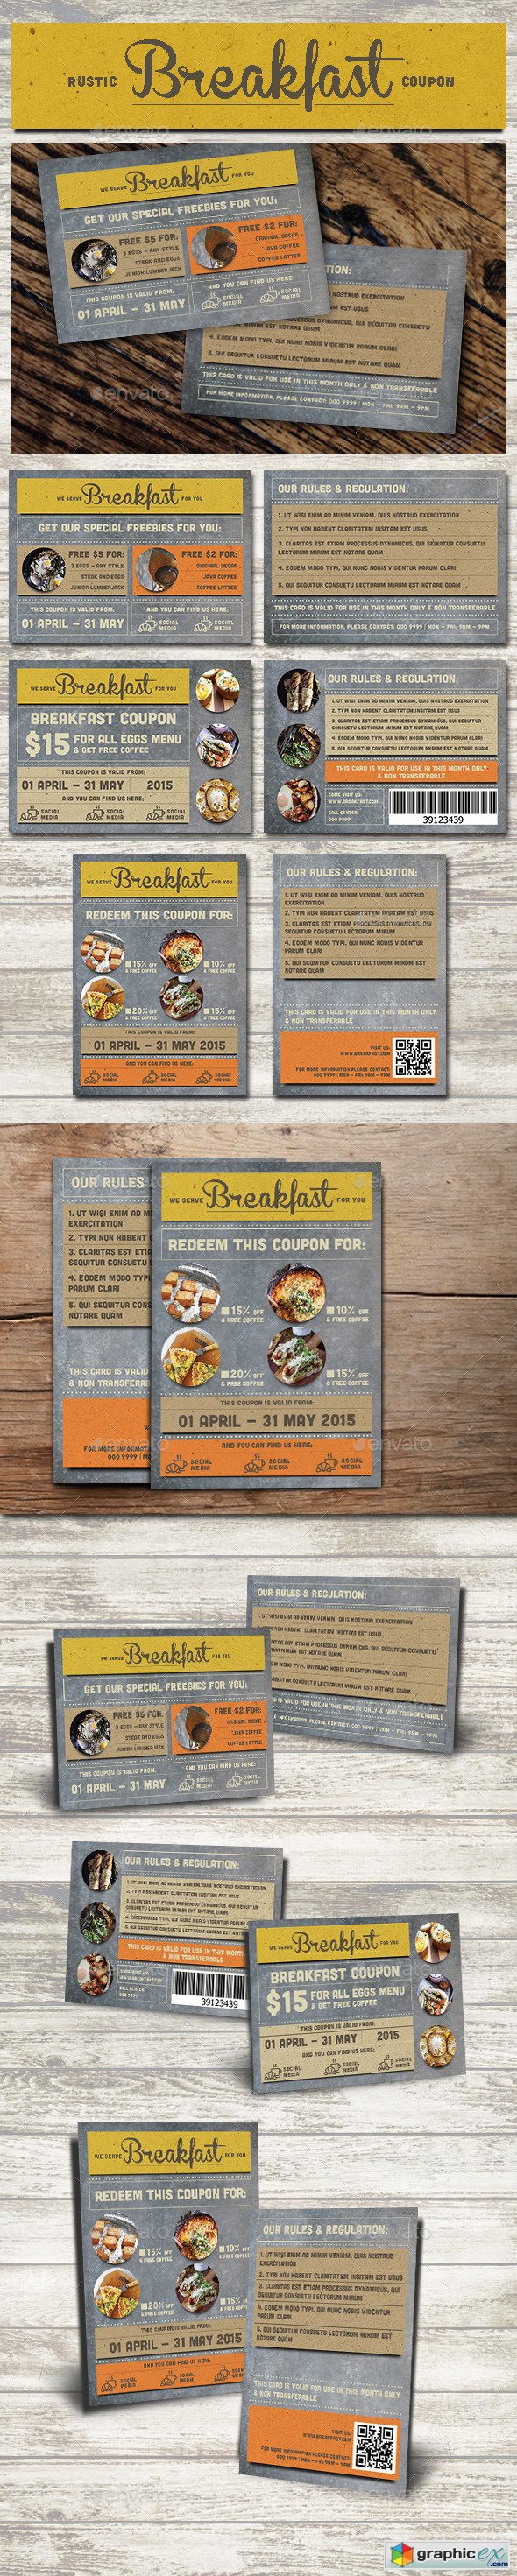 Rustic Breakfast Coupon Card